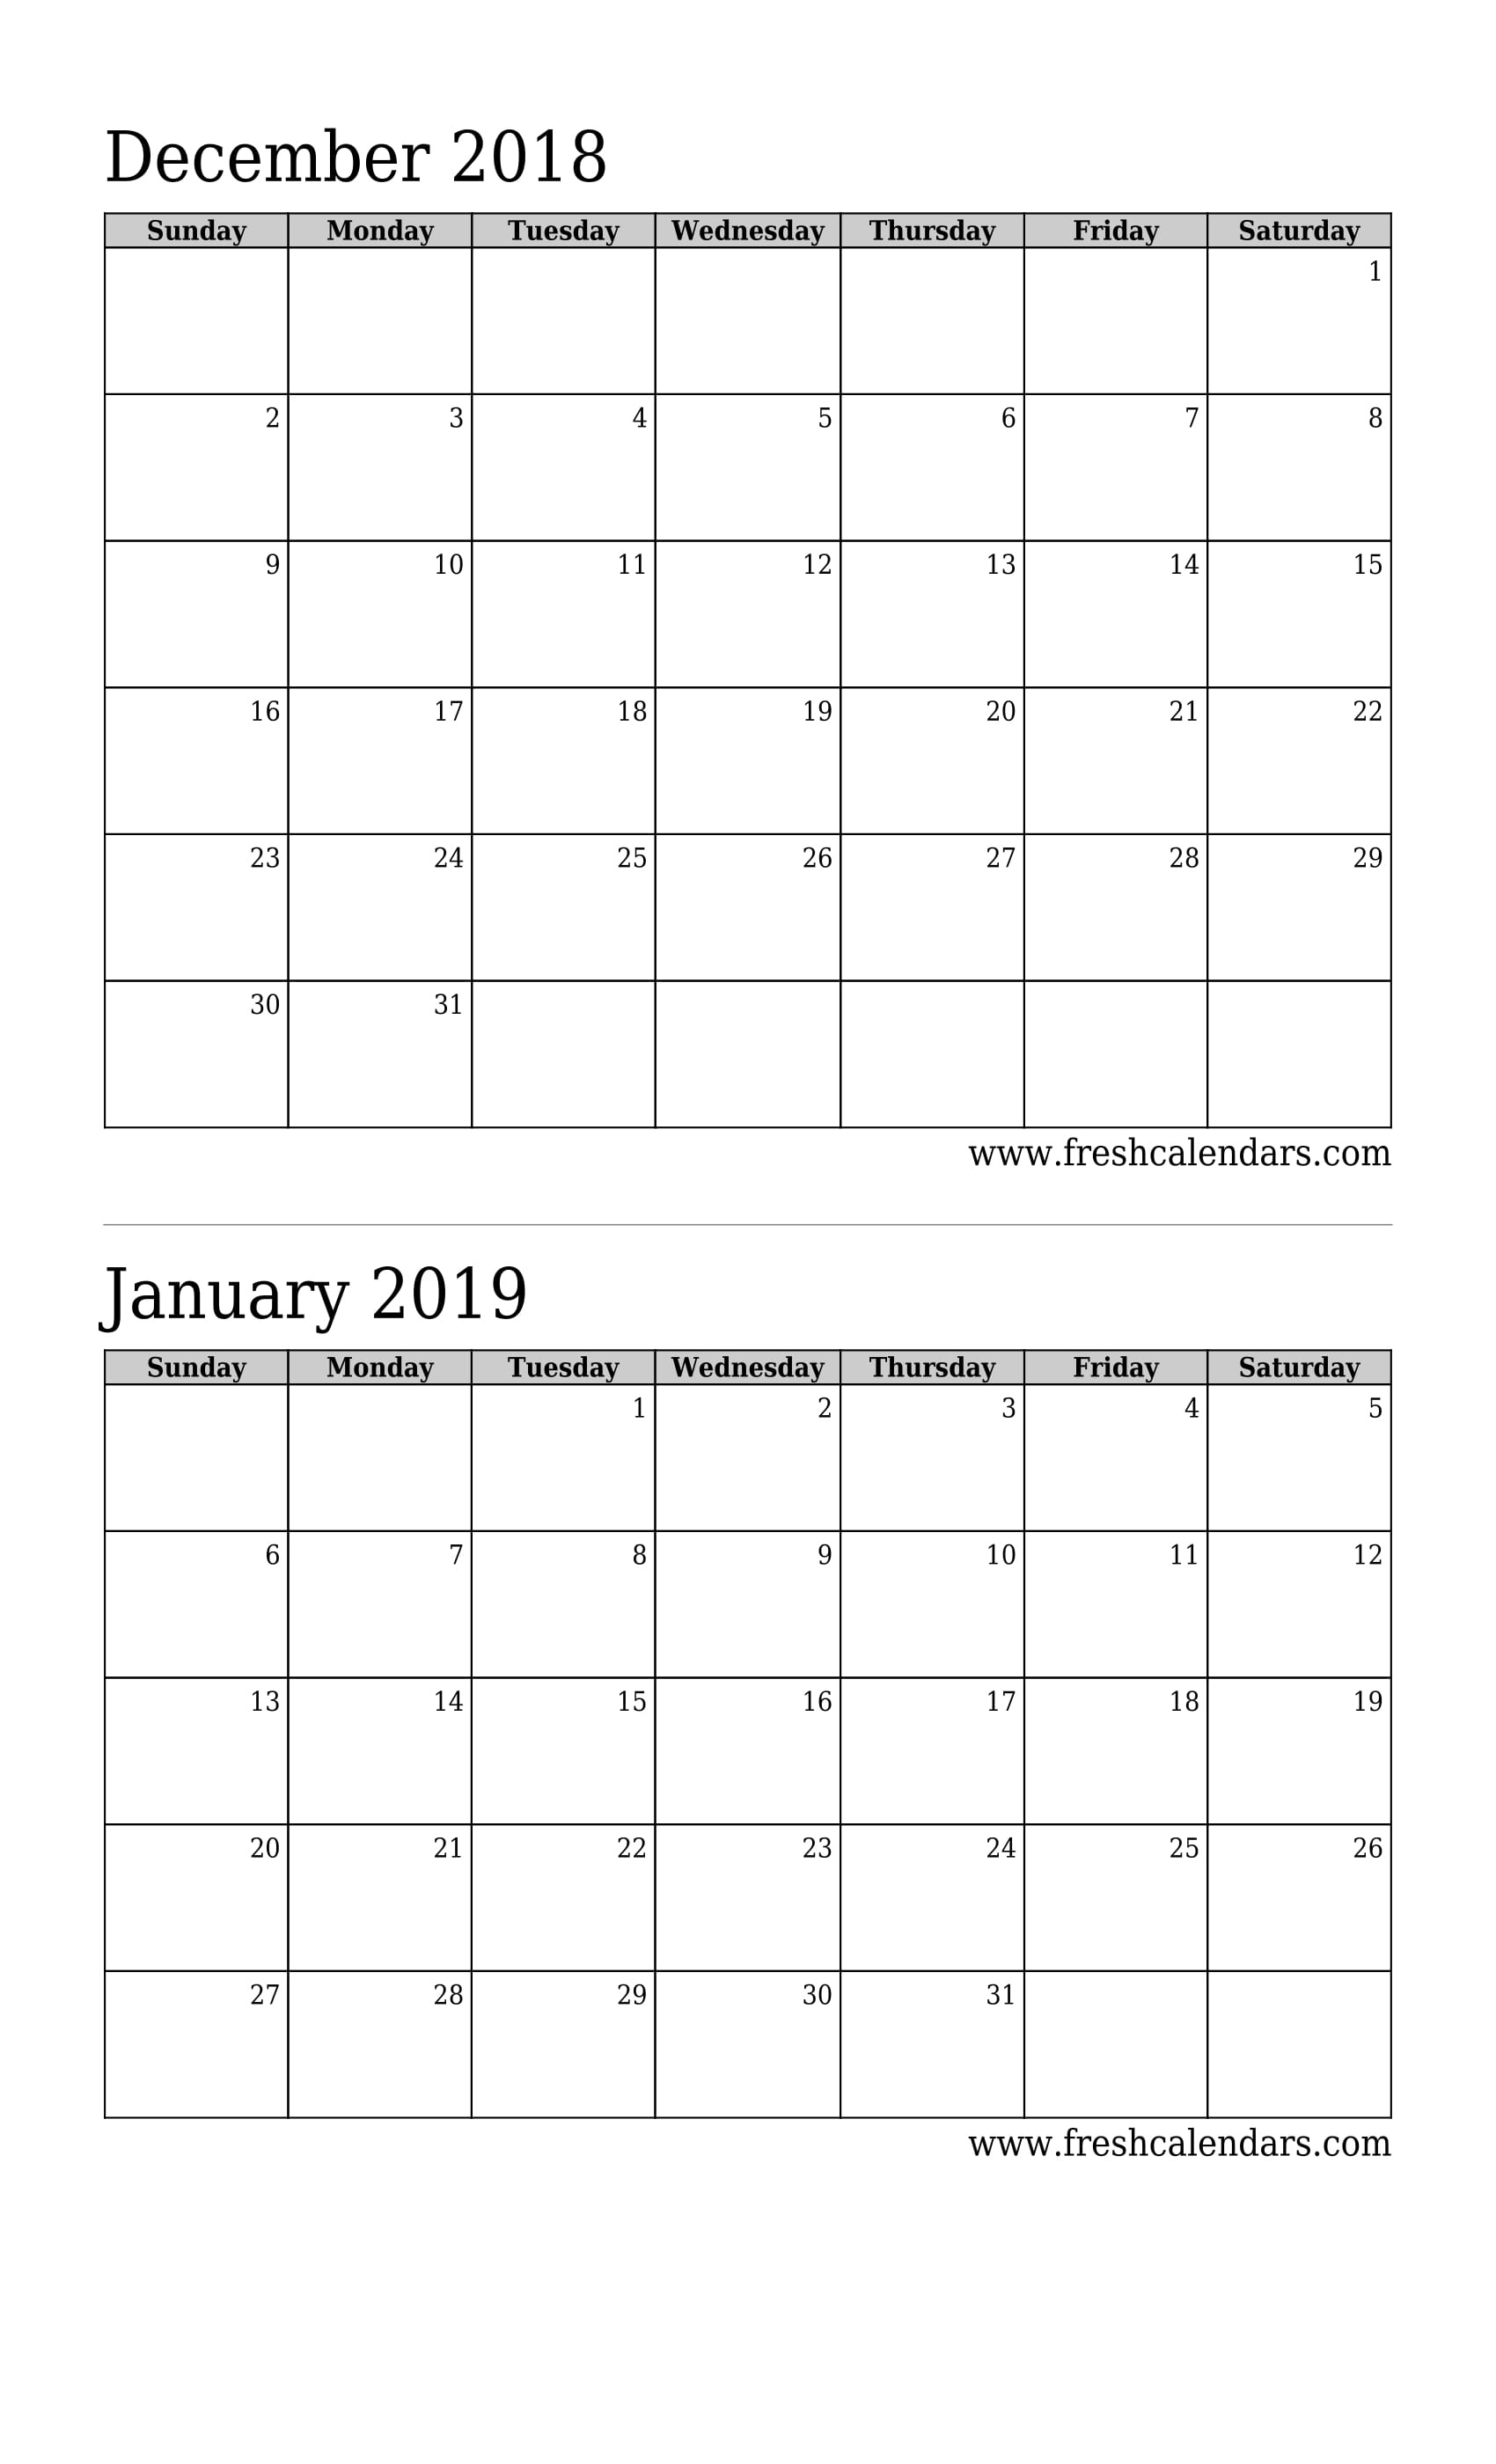 December 2018 Calendar Printable - Fresh Calendars 2 Monthly Calendar Template